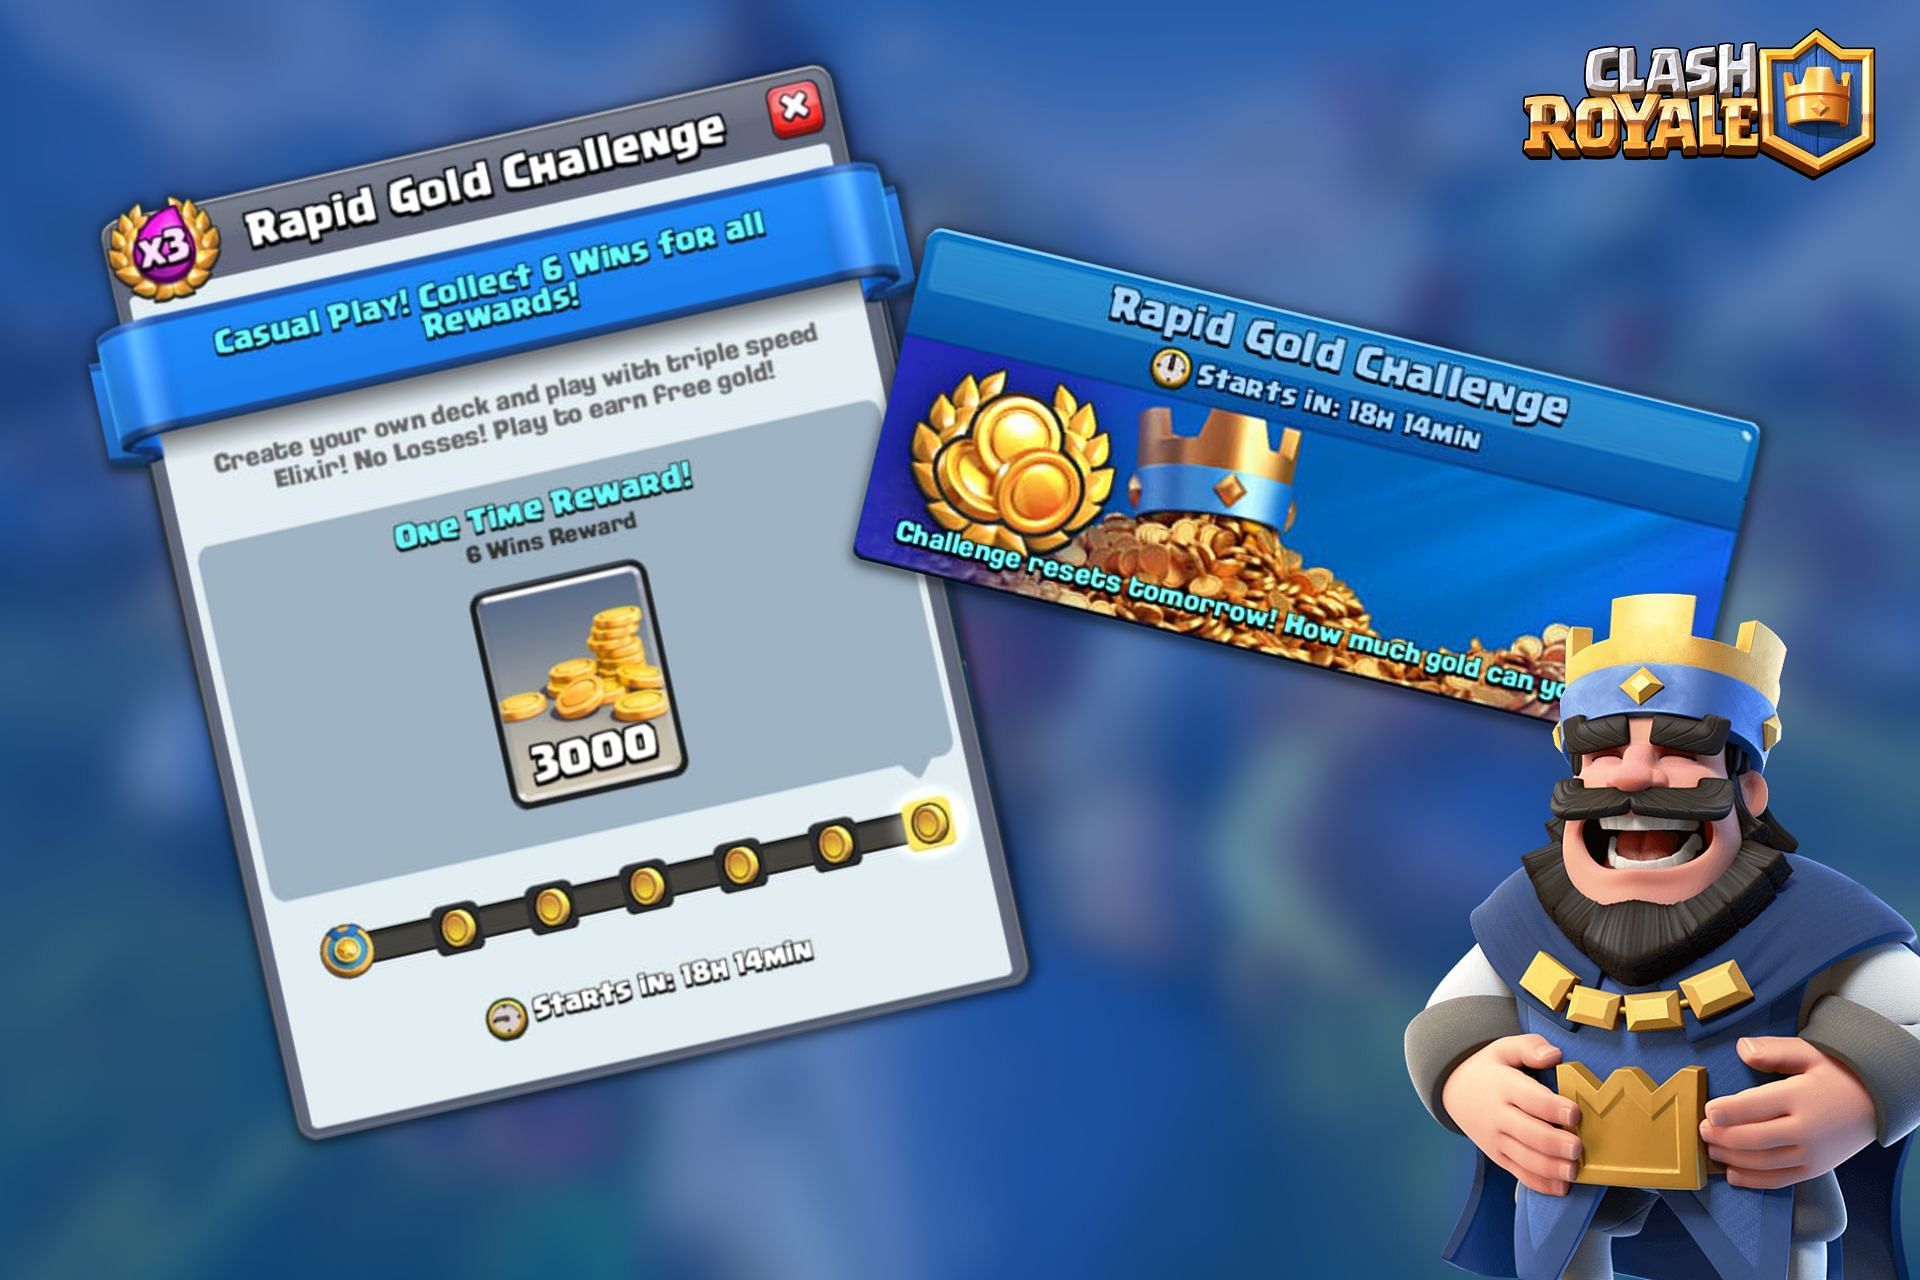 The Rapid Gold Challenge in Clash Royale (Image via Sportskeeda)